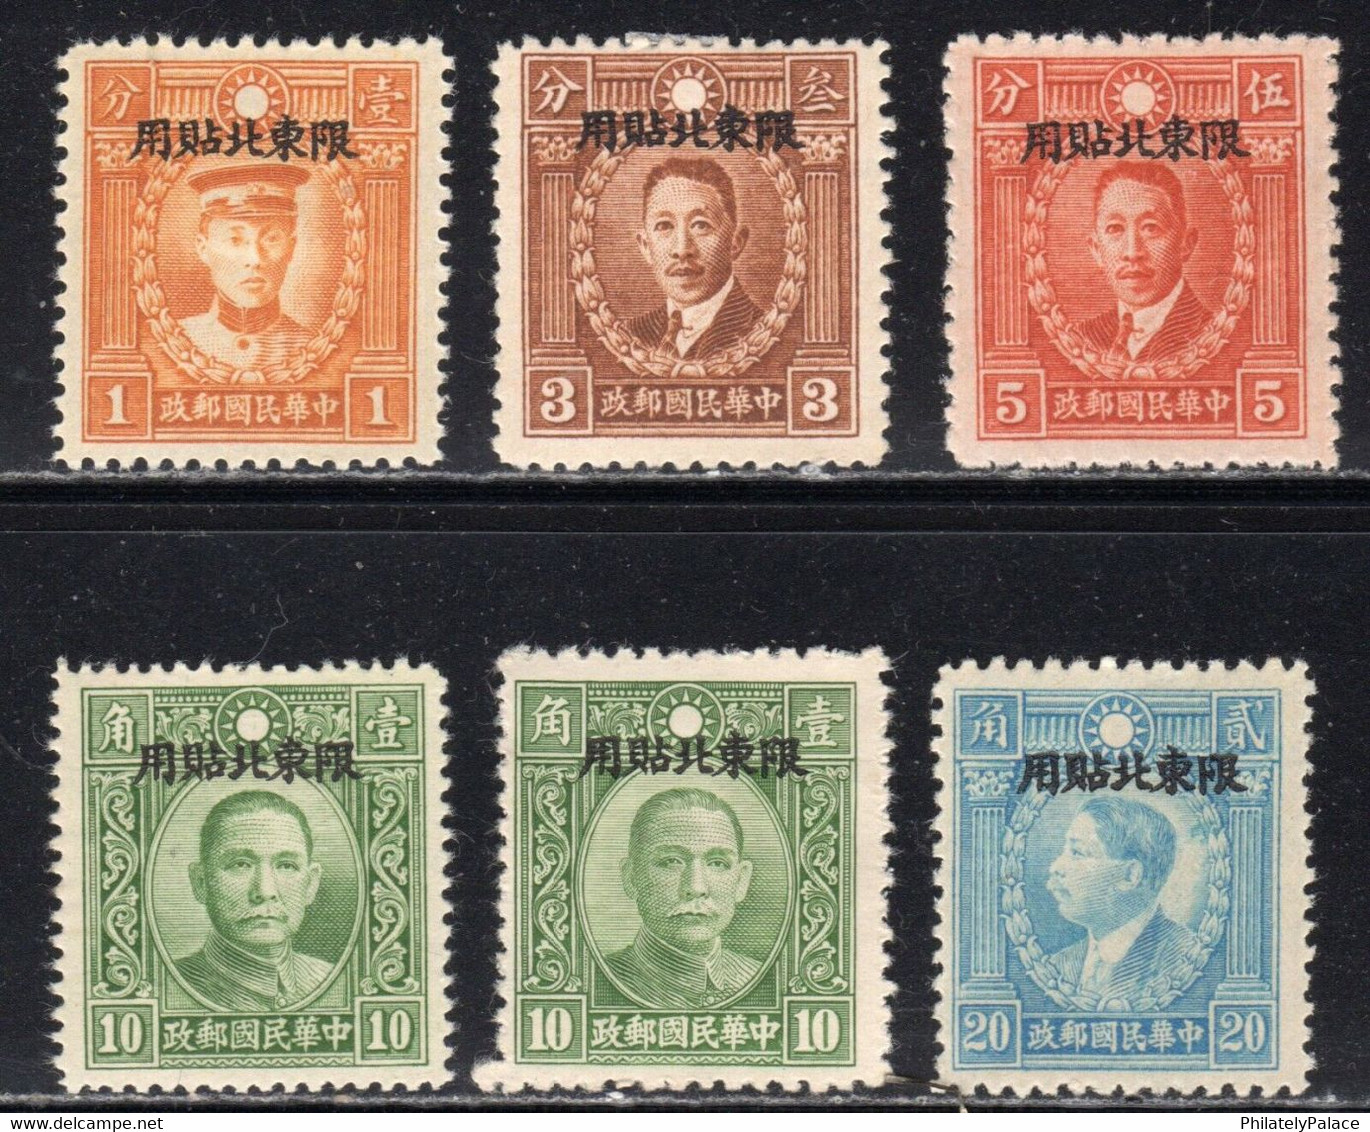 China NE Provinces 1946 Optd "Limited For Use In NE" Full Set Of 6 MNH (**) VERY RARE SET - 1943-45 Shanghai & Nankin